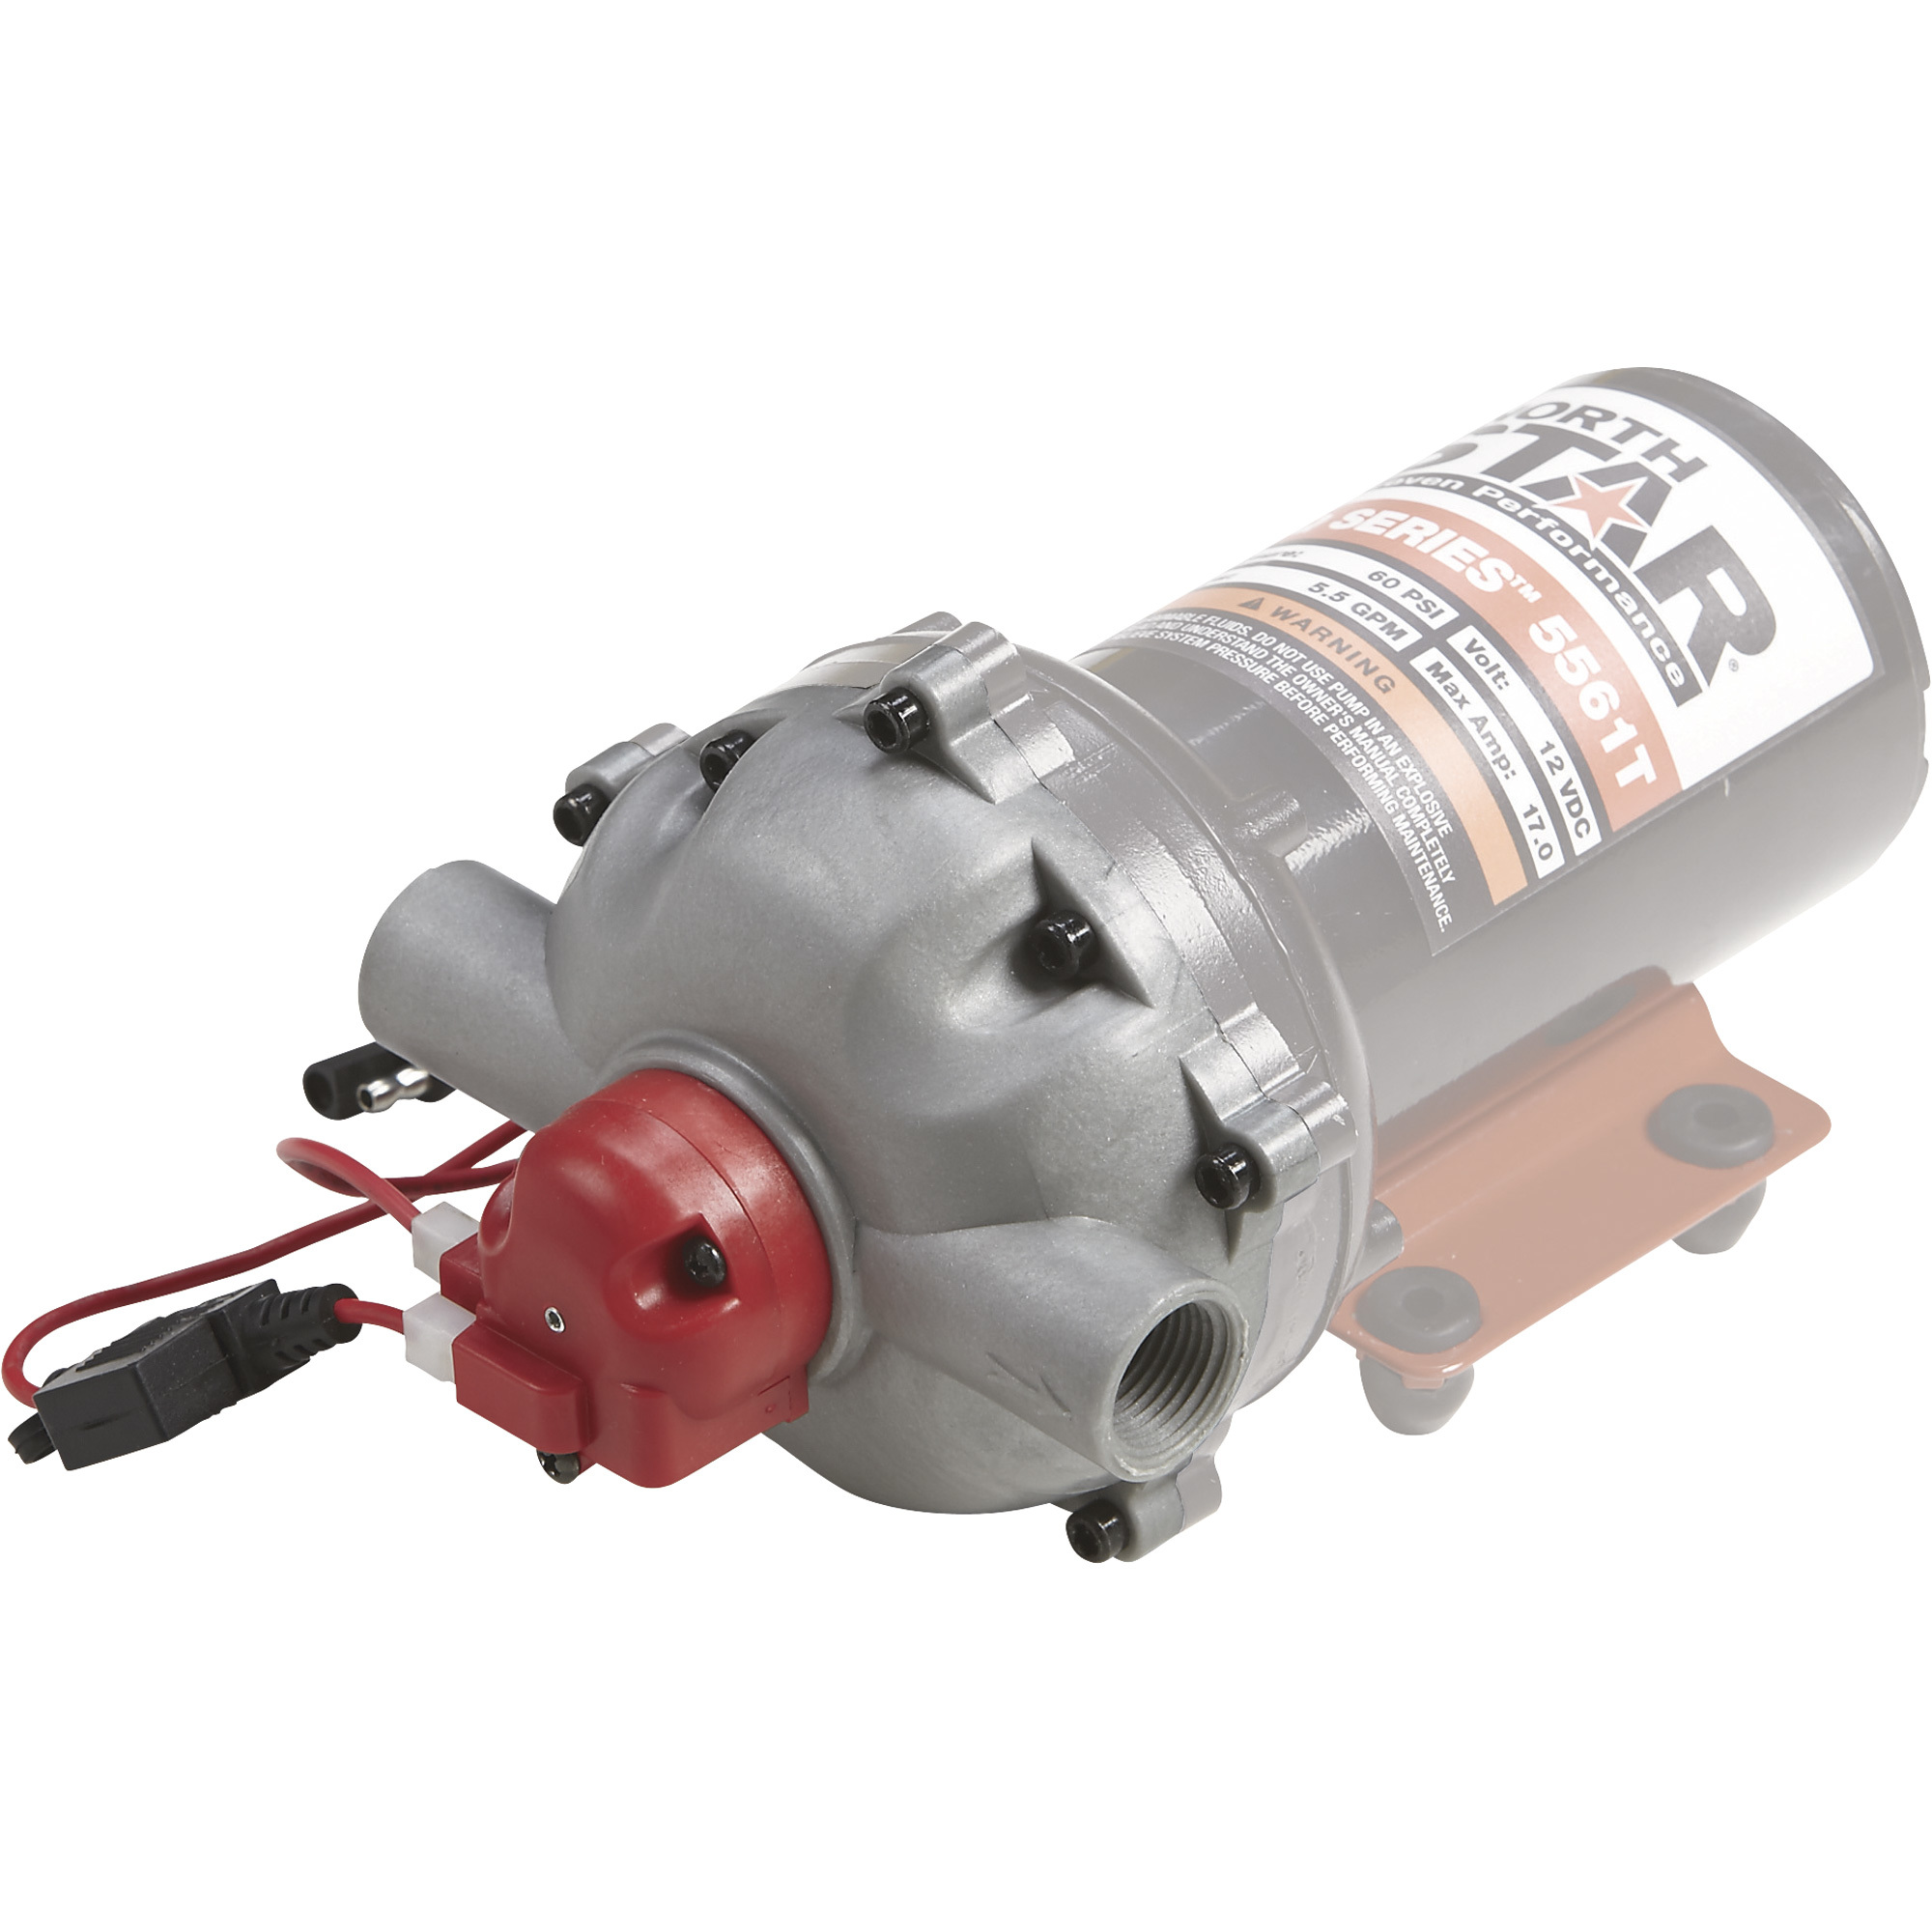 NorthStar Replacement Sprayer Pump Head â 1/2Inch NPT Ports, 5.5 GPM, 60 PSI, Model A2685561